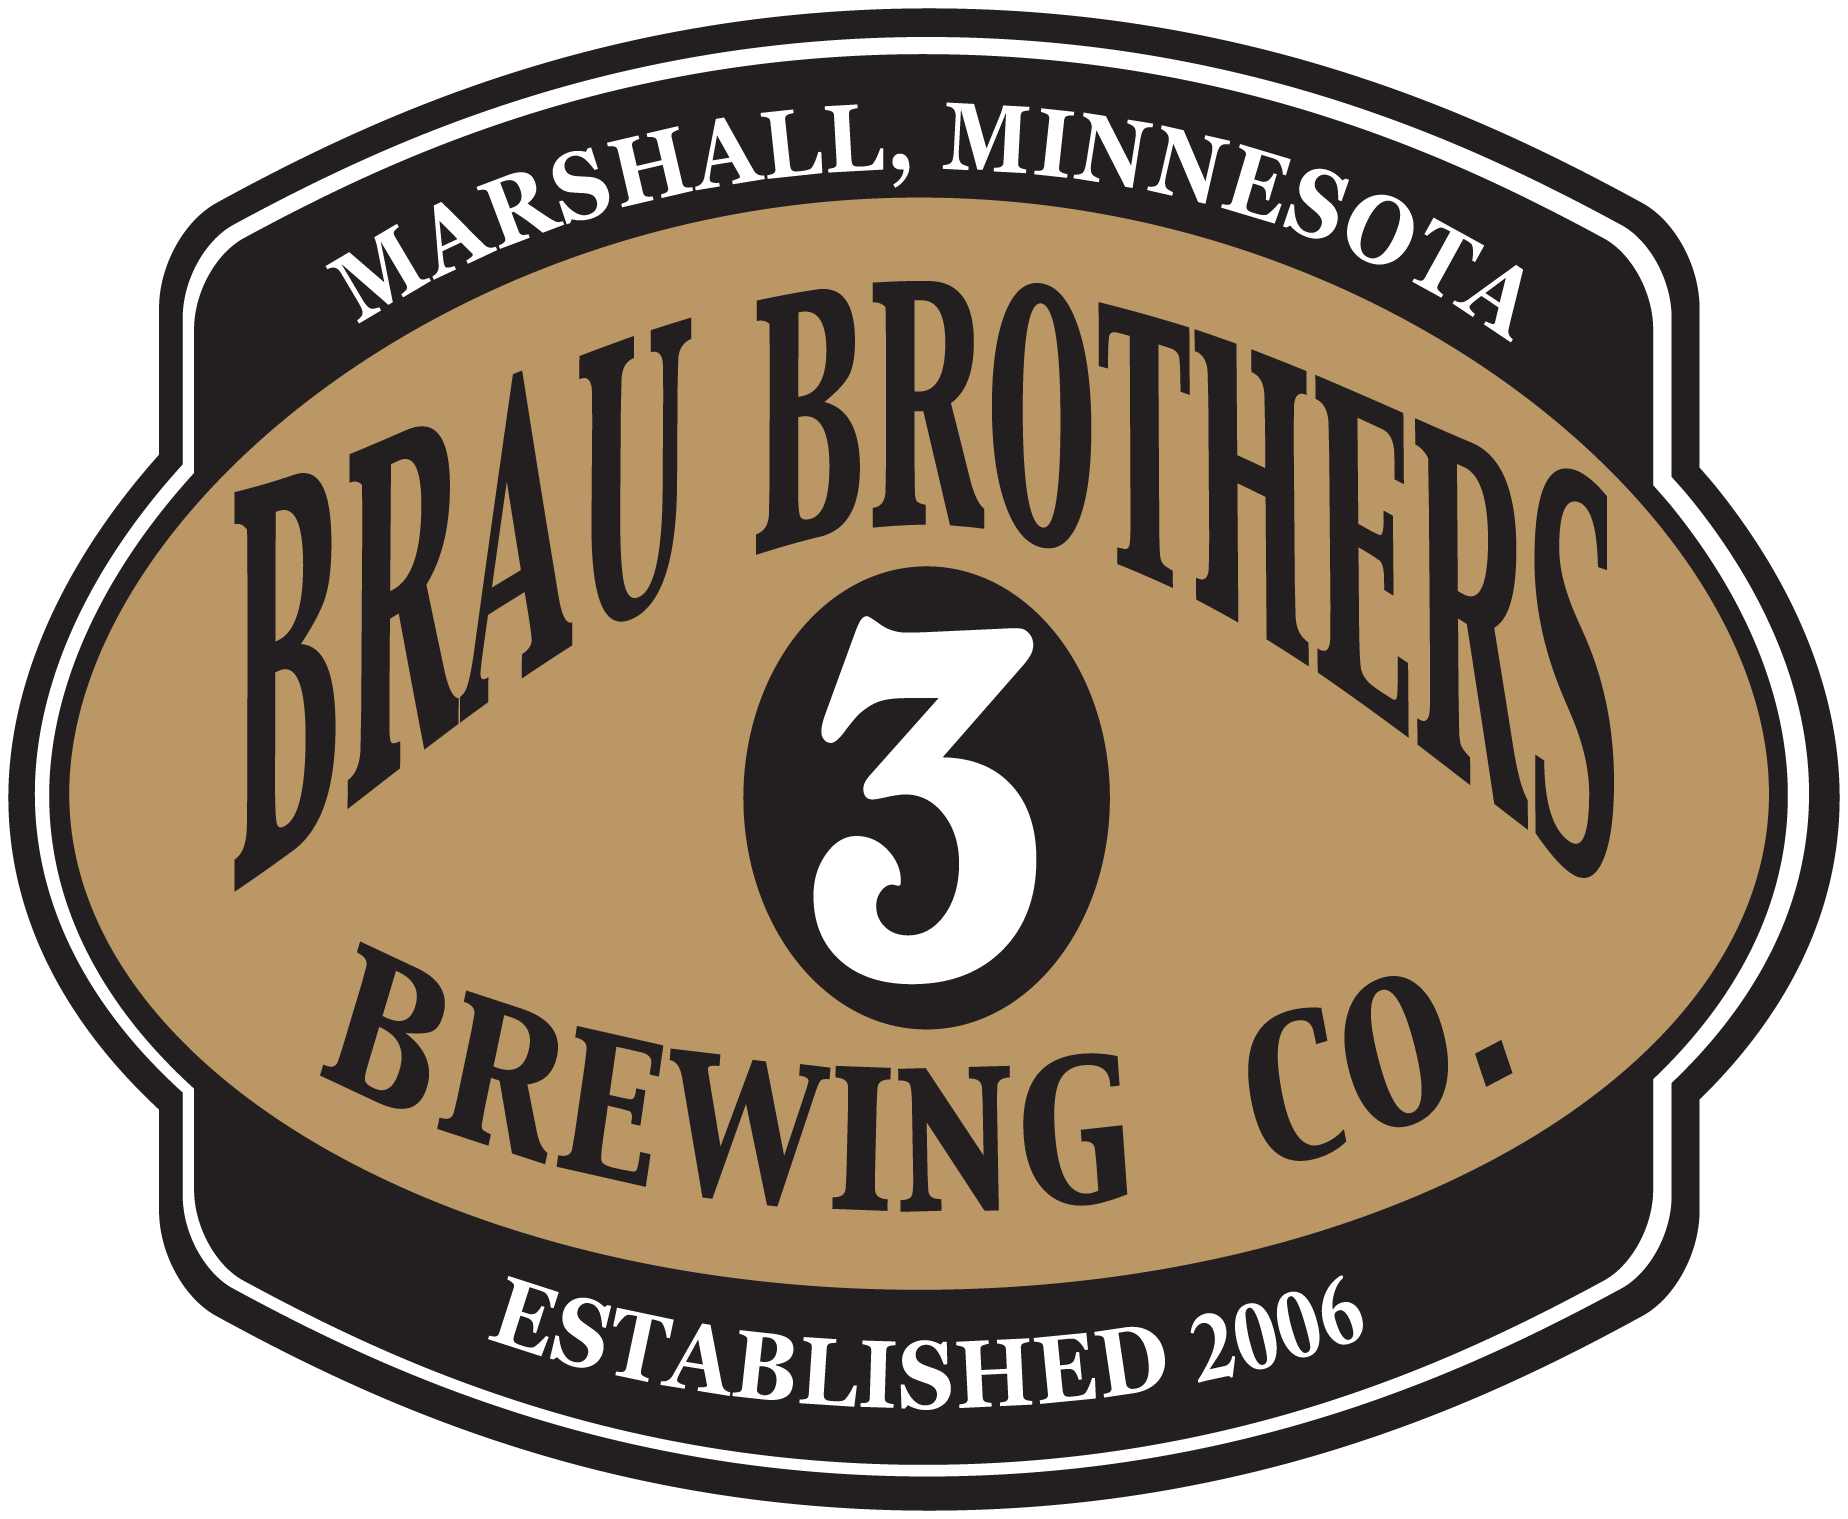 Brau Brothers Brewing Company